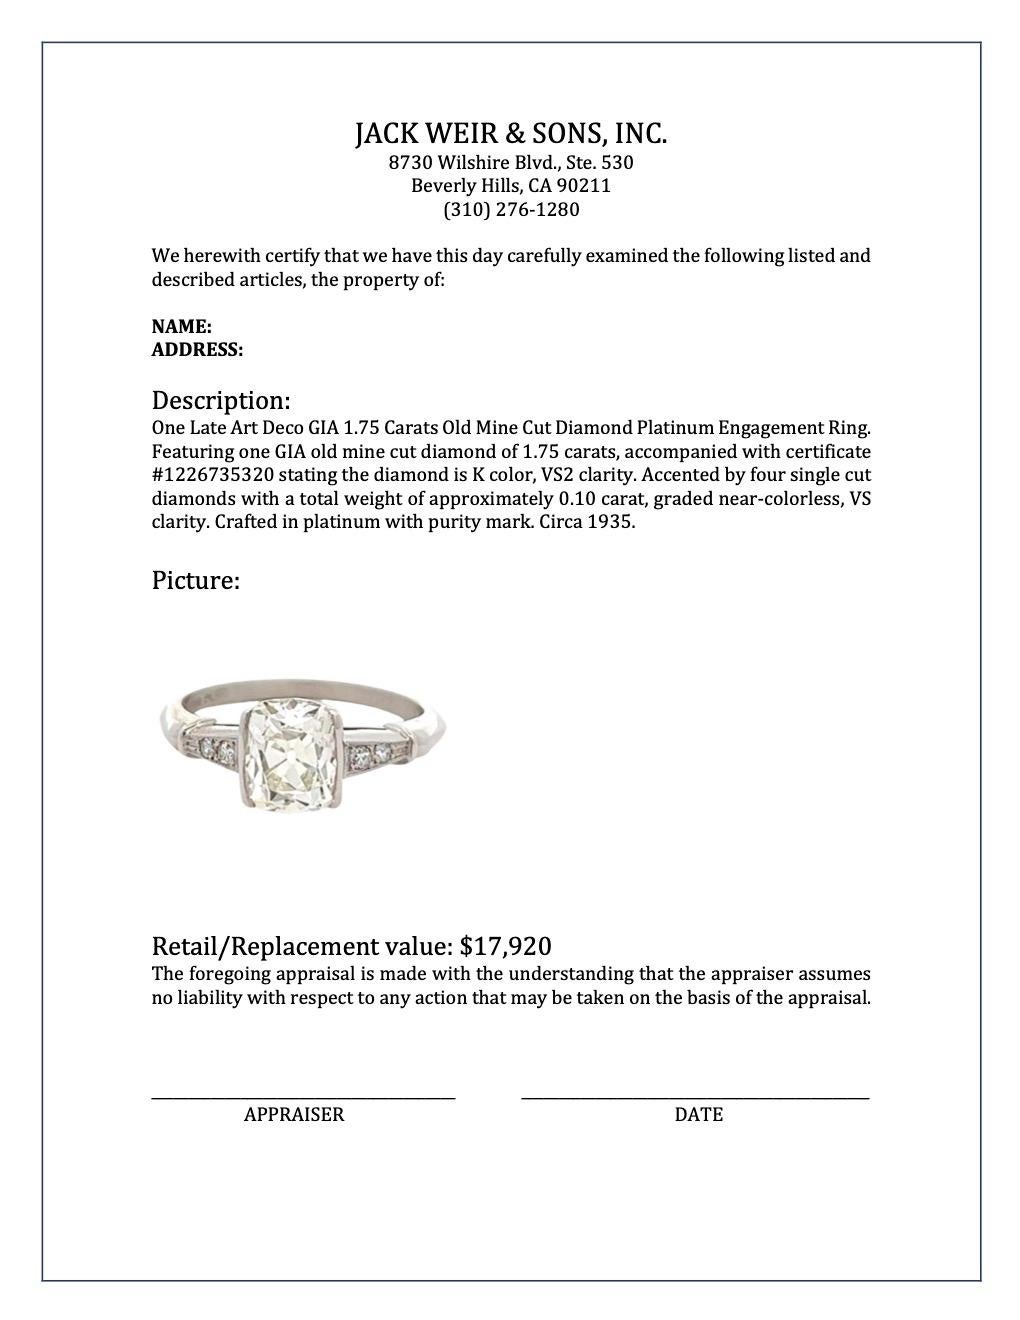 Late Art Deco GIA 1.75 Carats Old Mine Cut Diamond Platinum Engagement Ring 3